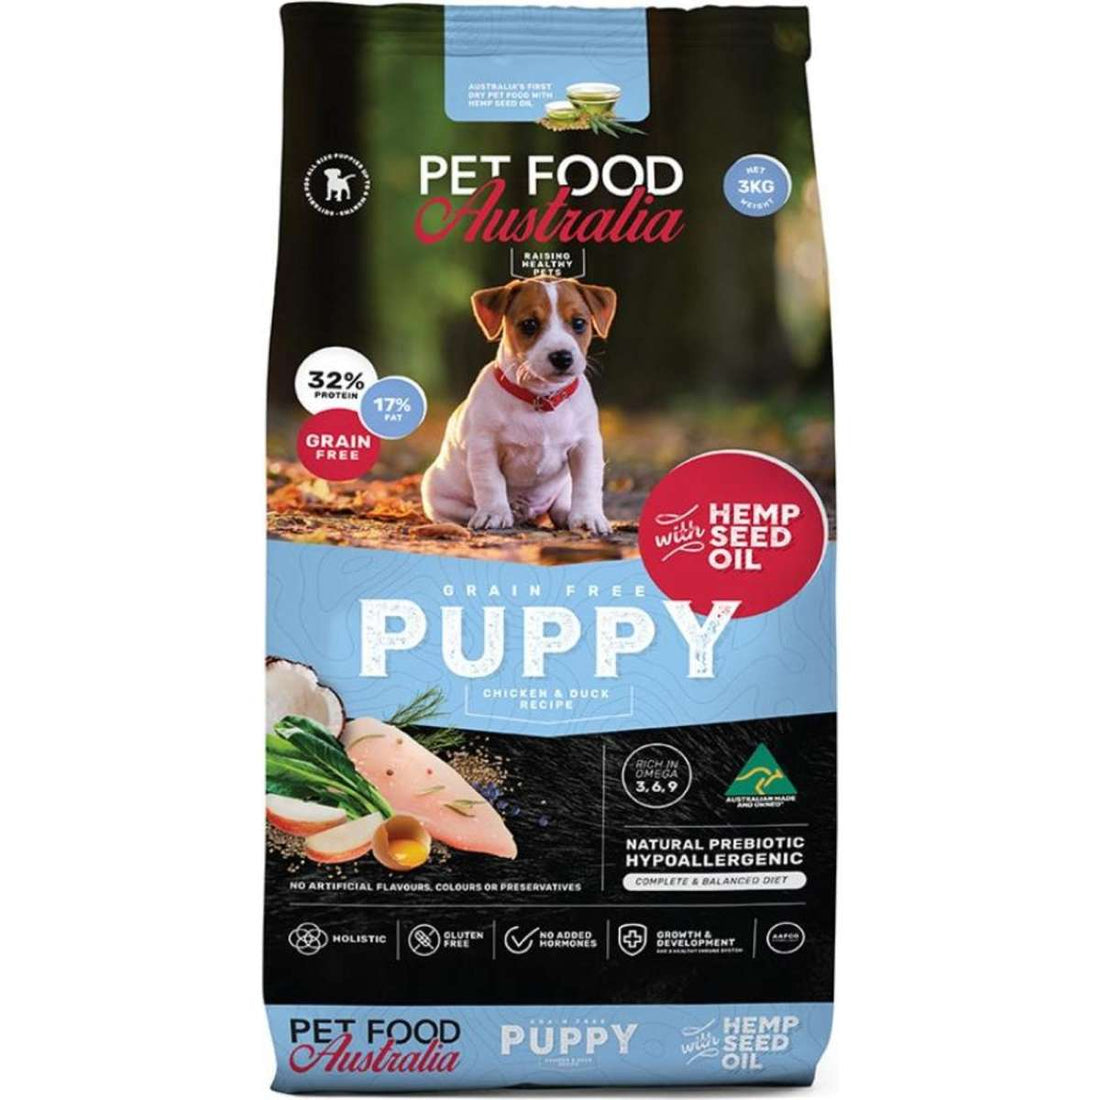 Pet Food Australia Chicken & Duck Puppy Grain Free Natural Dry Dog Food 3kg